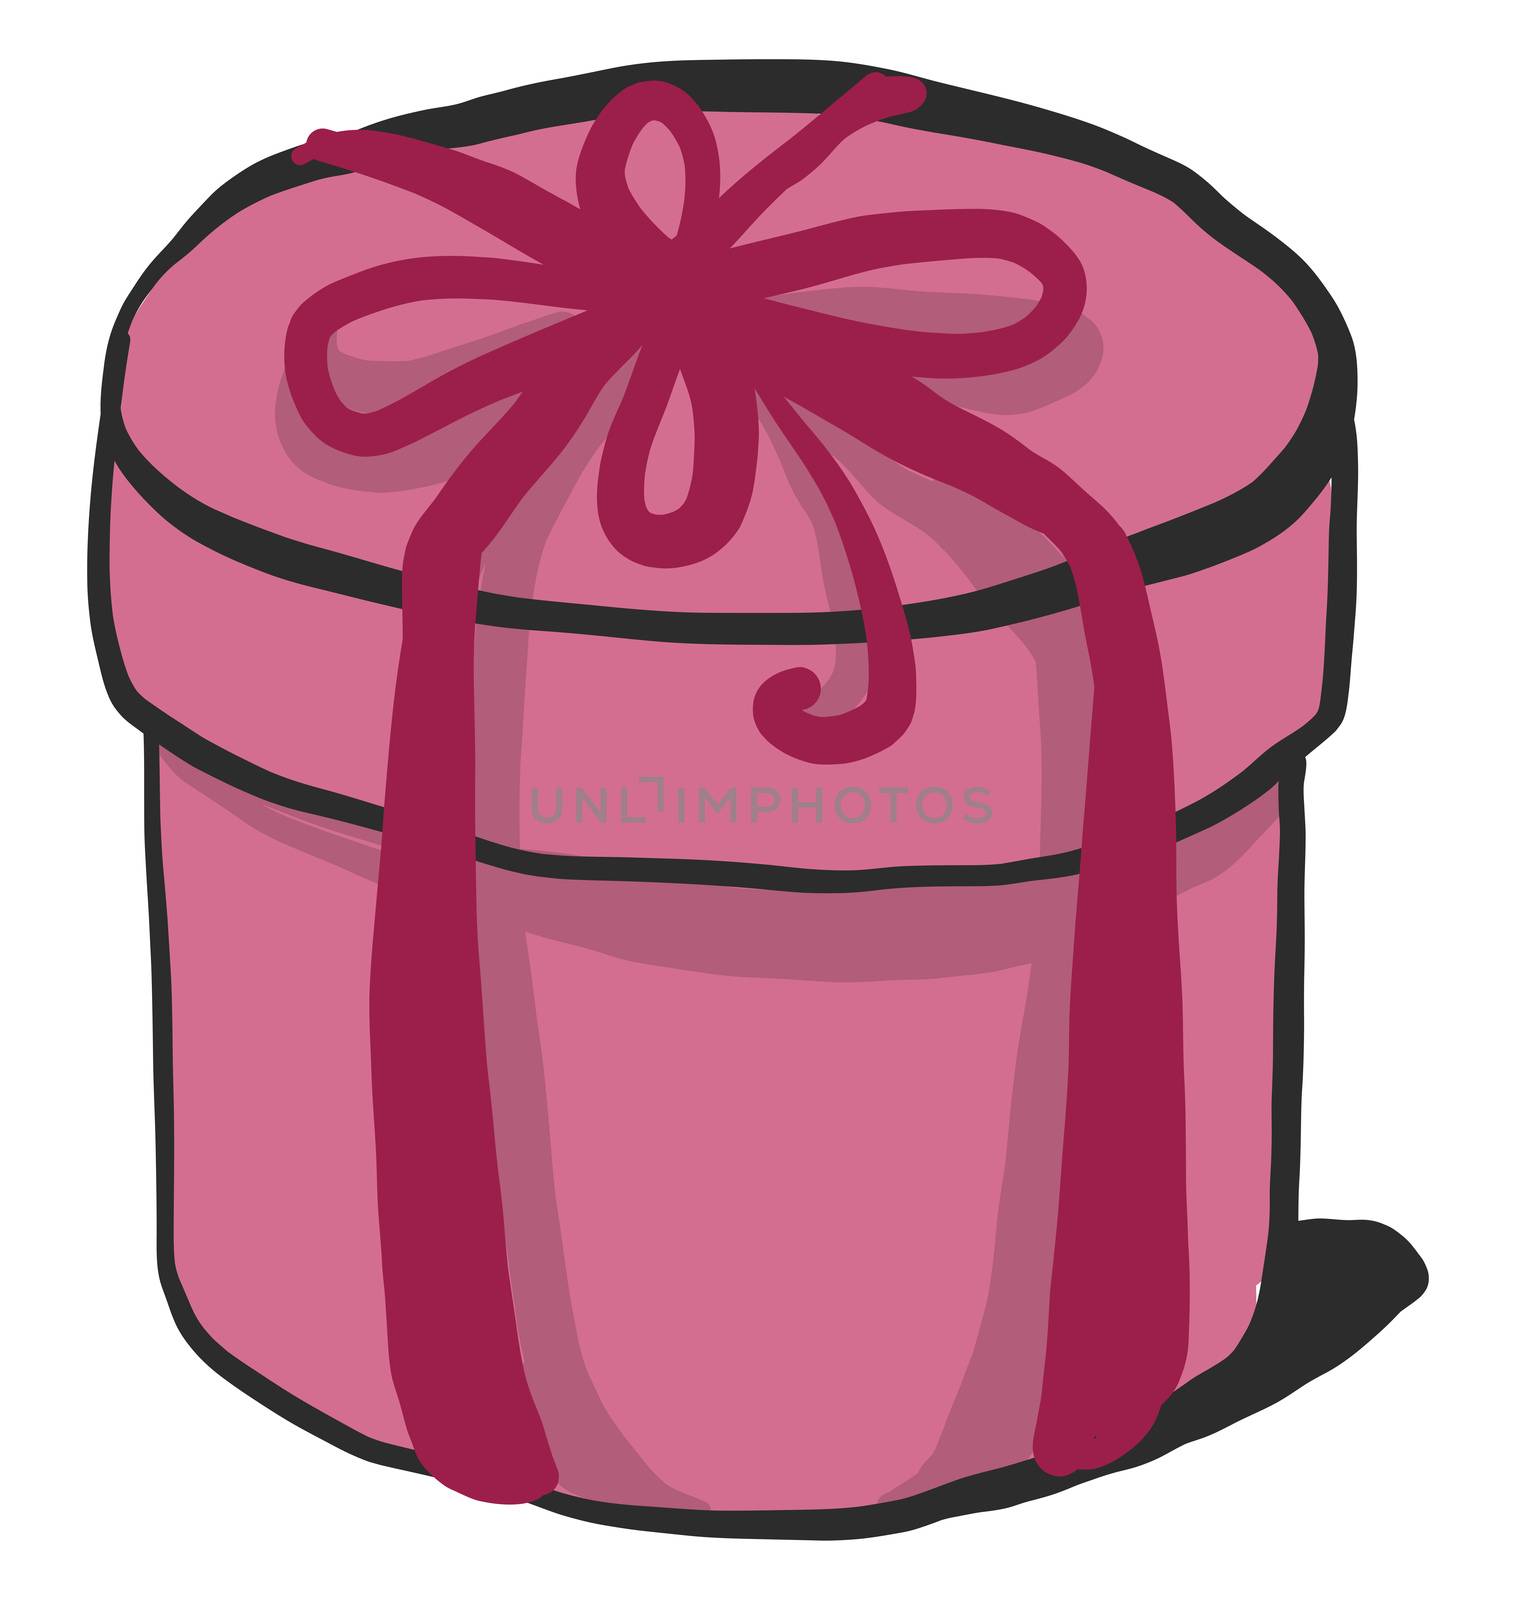 Round pink gift box , illustration, vector on white background